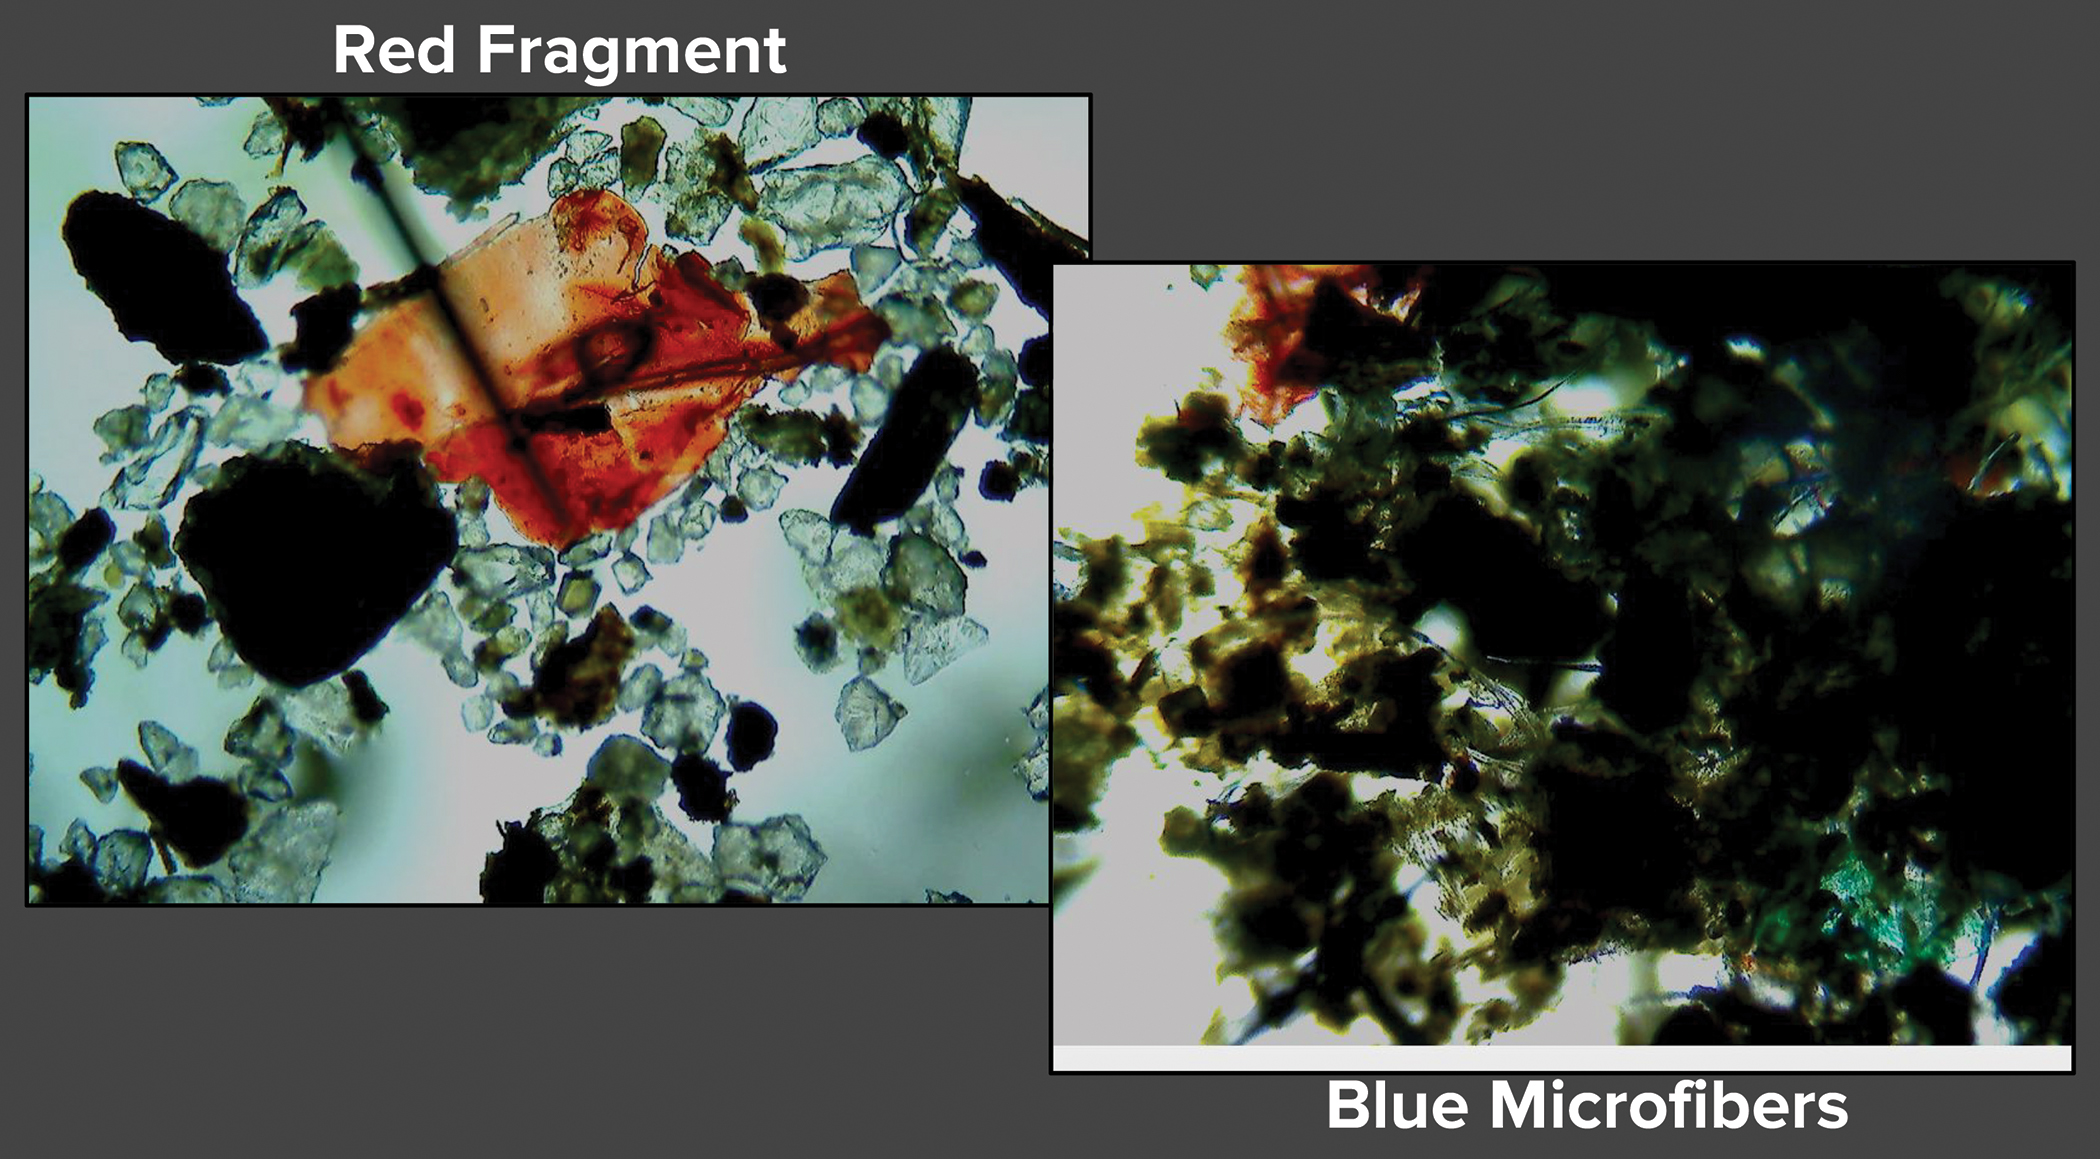 Plastic fragment and microfiber